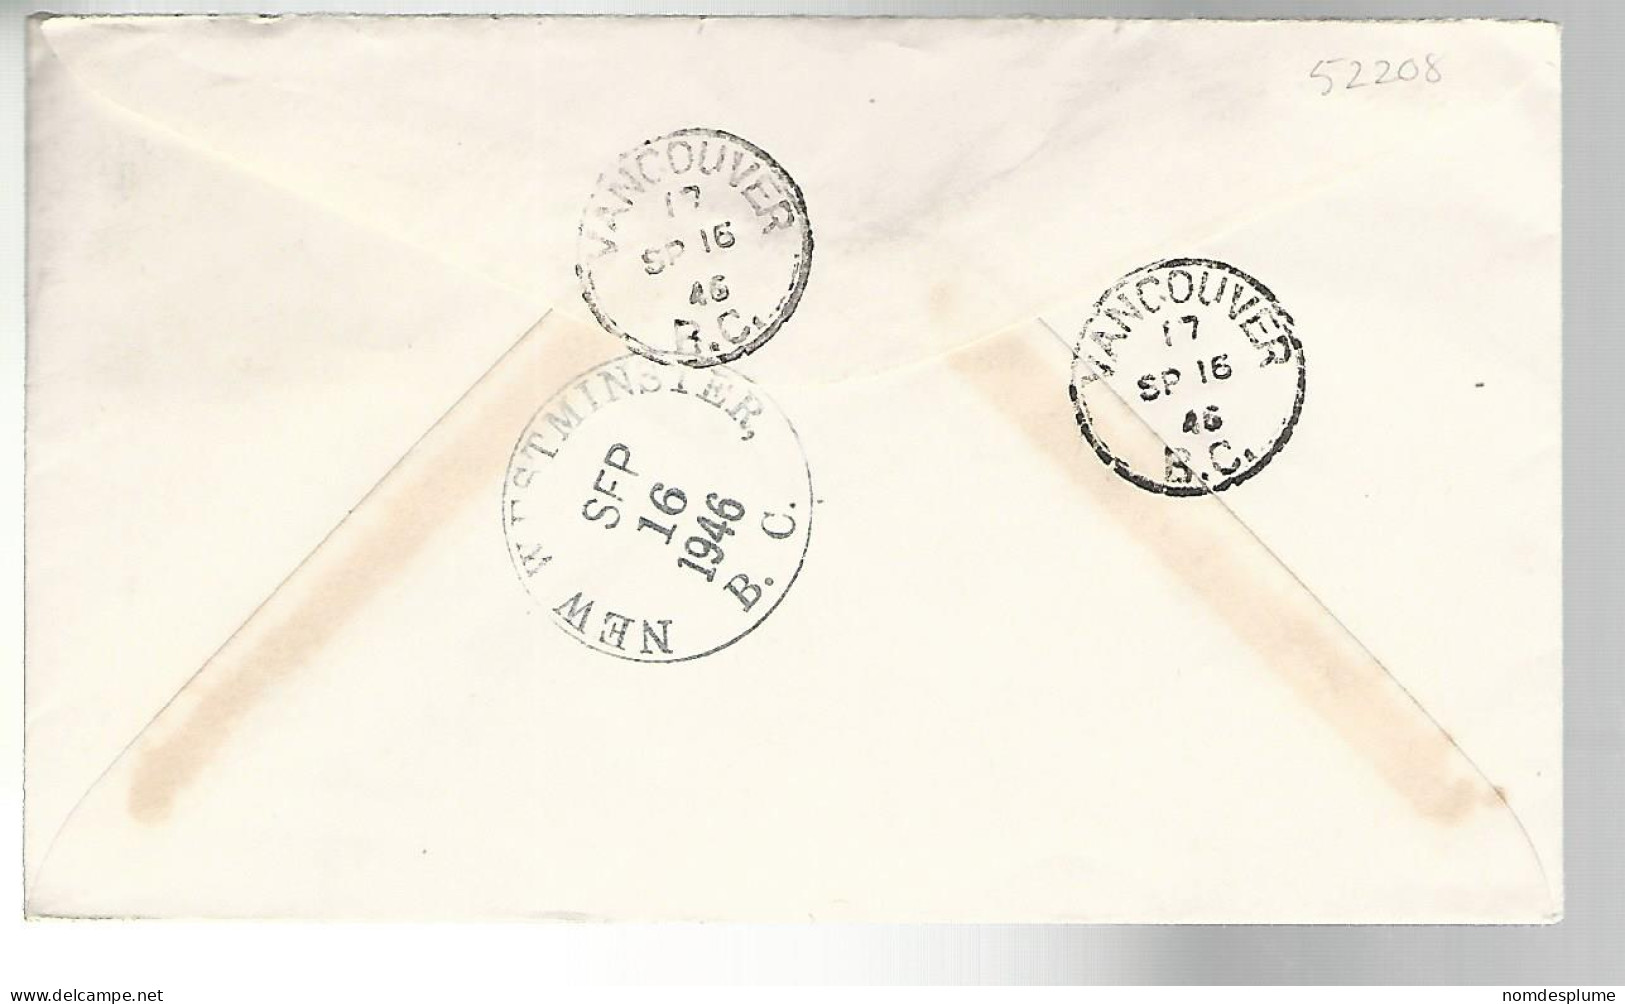 52208 ) Canada Registered Postmark 1946 Vancouver New Westminster - Recommandés